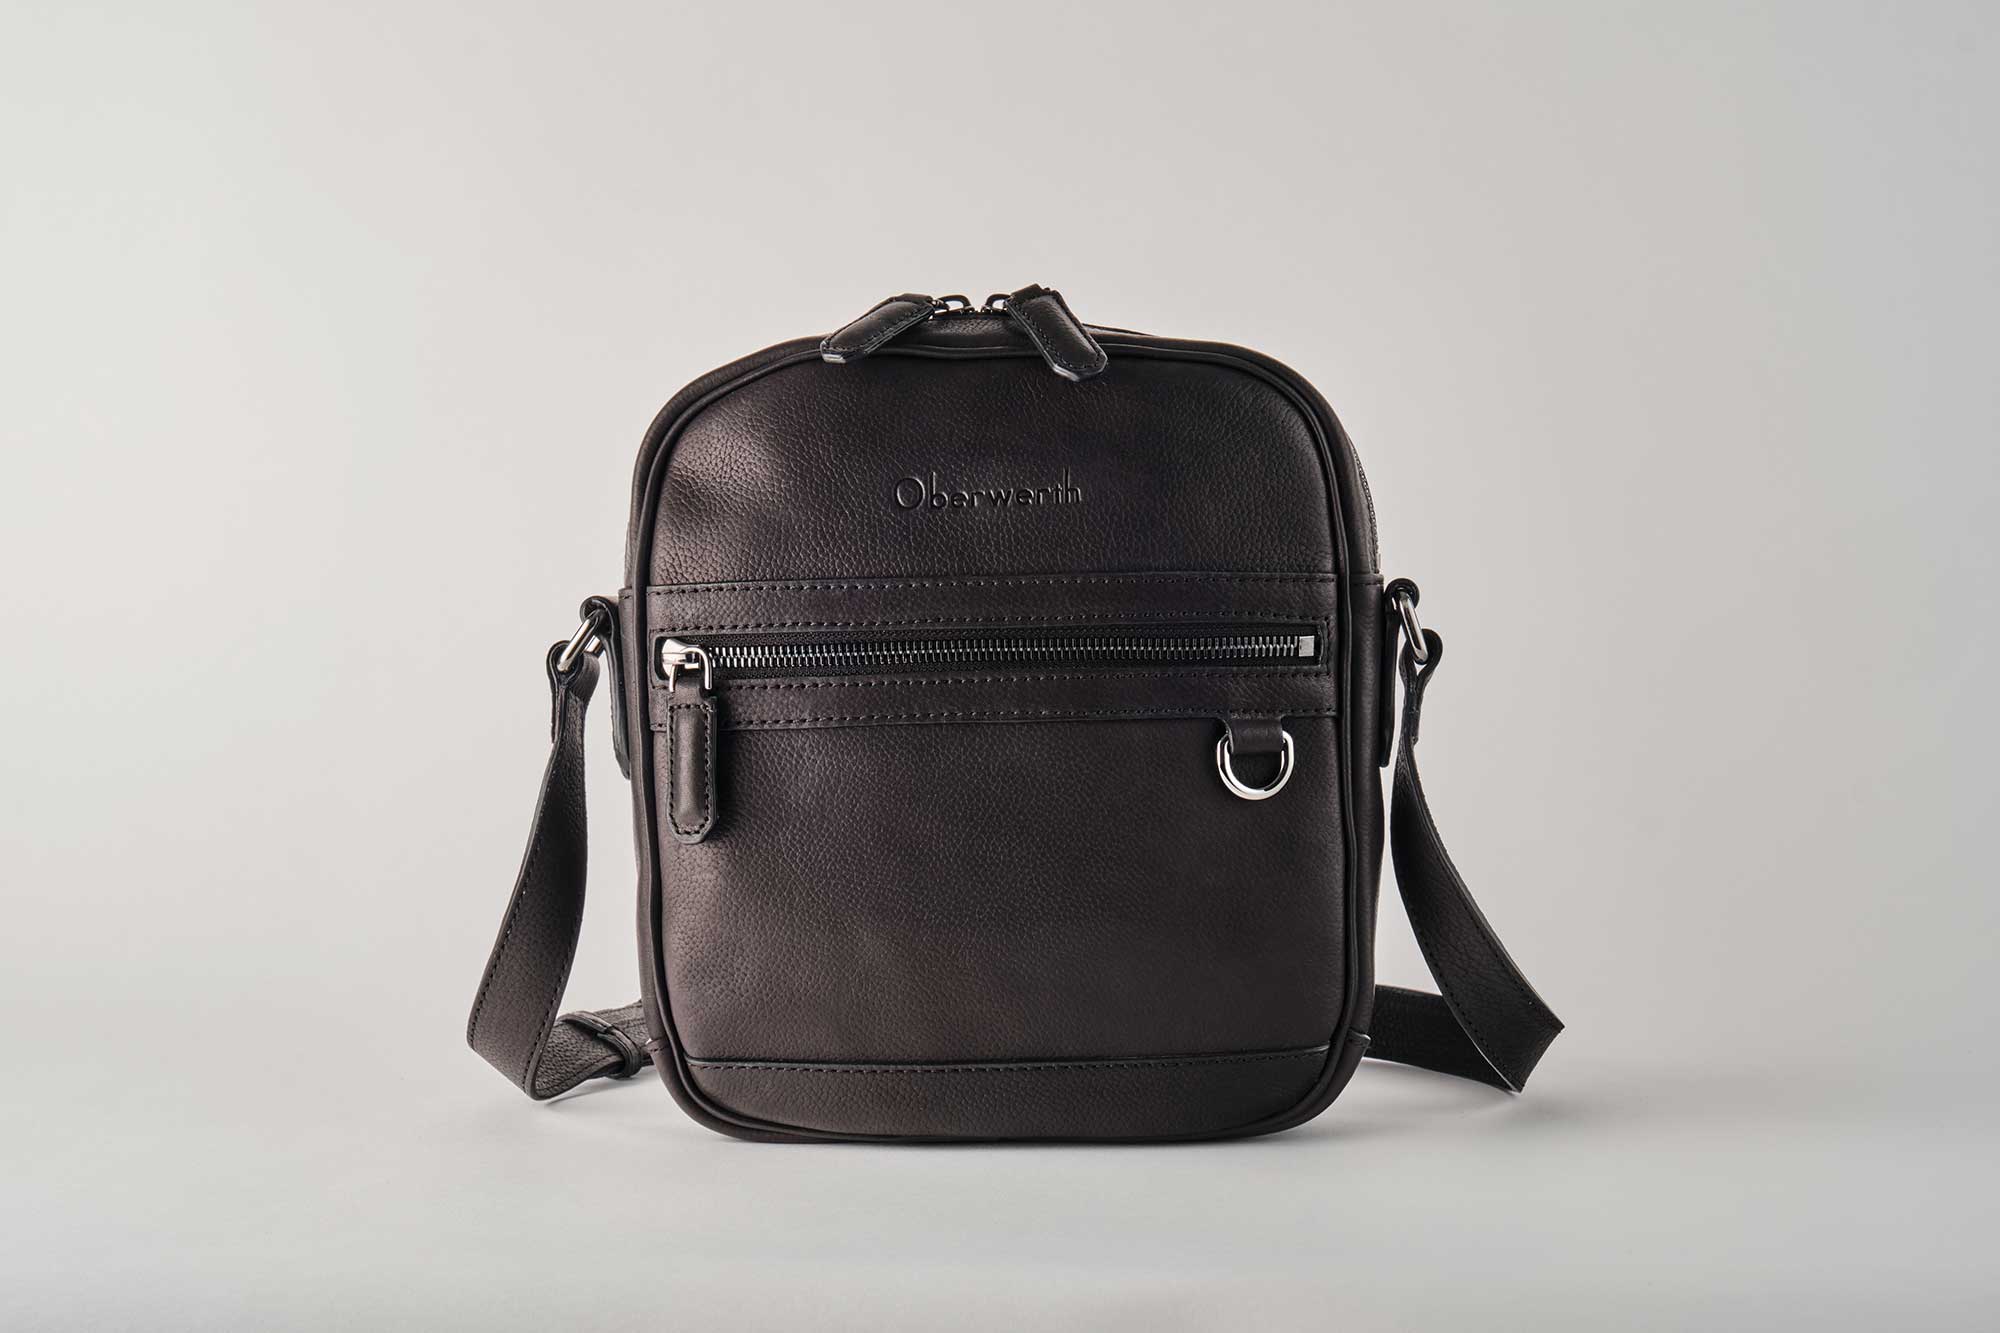 Stow Away Bag Luxury black